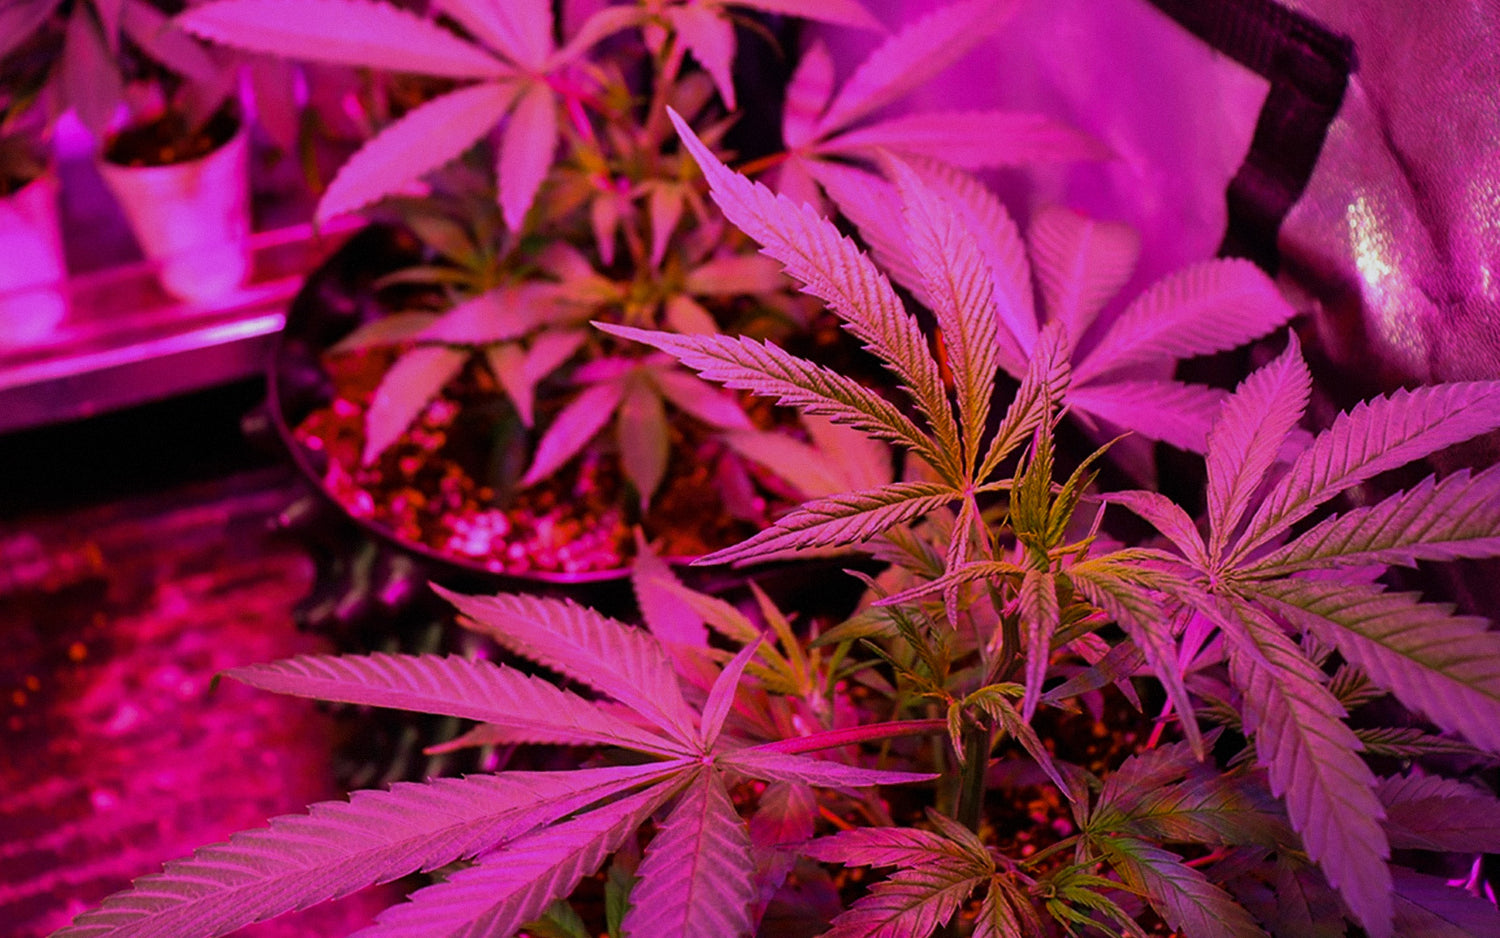 planta de cannabis en período vegetativo en interior iluminada con luz led